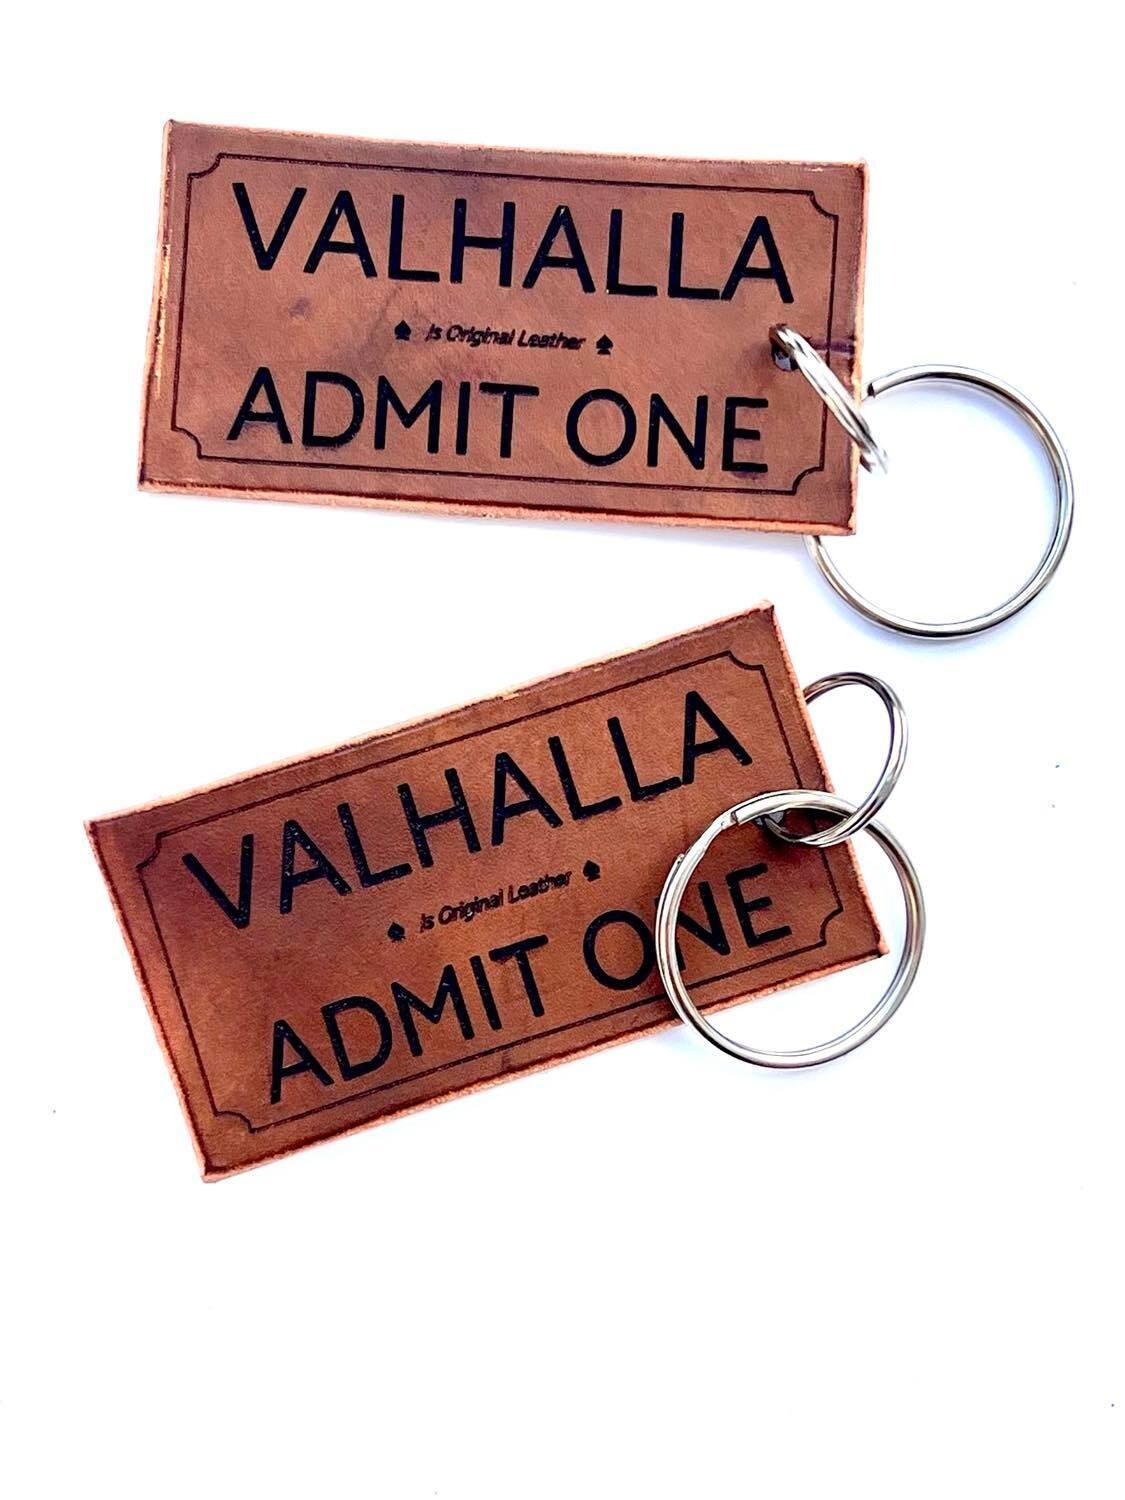 Valhalla tickets, admit one, key chain, luggage tag, zipper pull